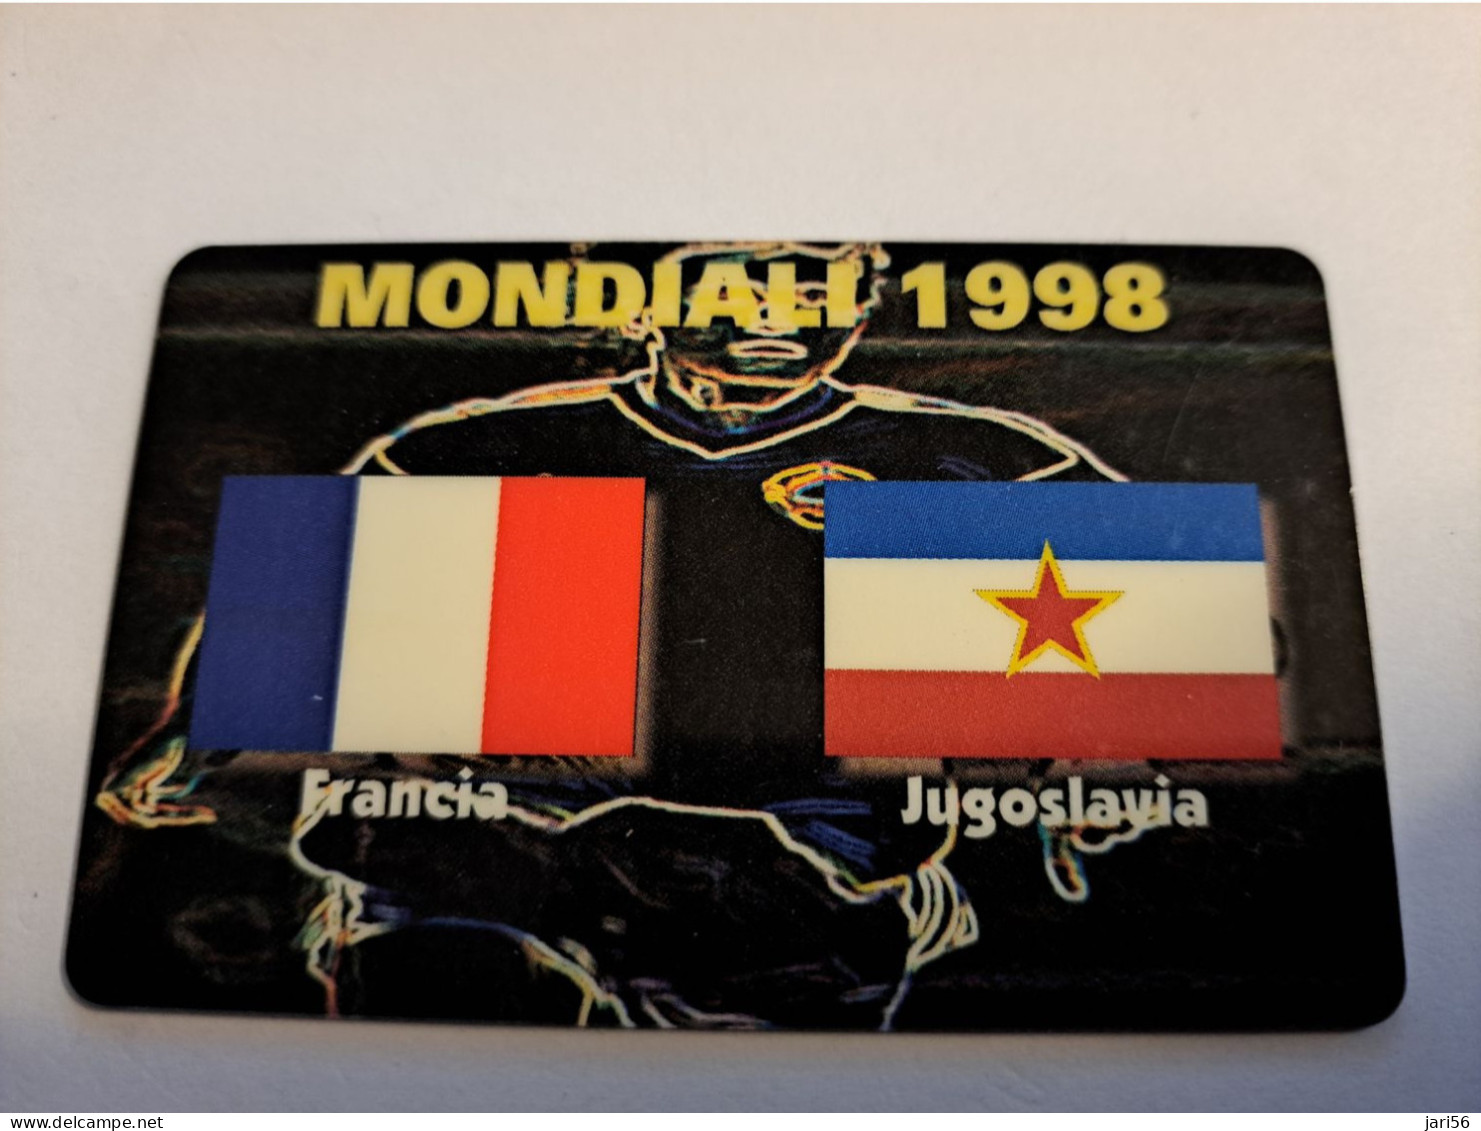 ITALIA/ITALY  PREPAID/ MONDIALI 1998 / FLAGS/ FRANCE / JUGOSLAVIA  MINT      **16069** - Collezioni